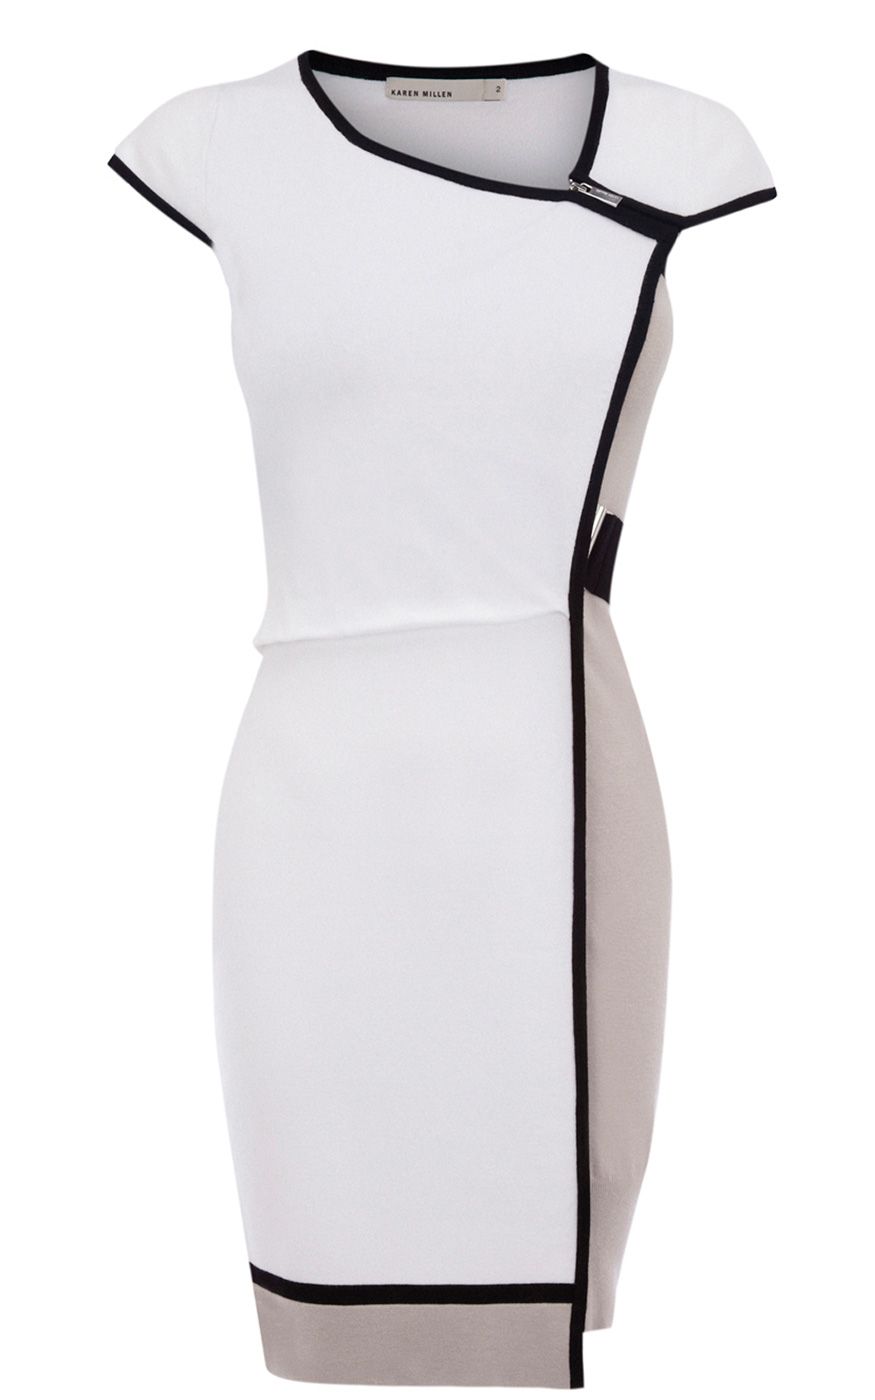 white dress with black trim